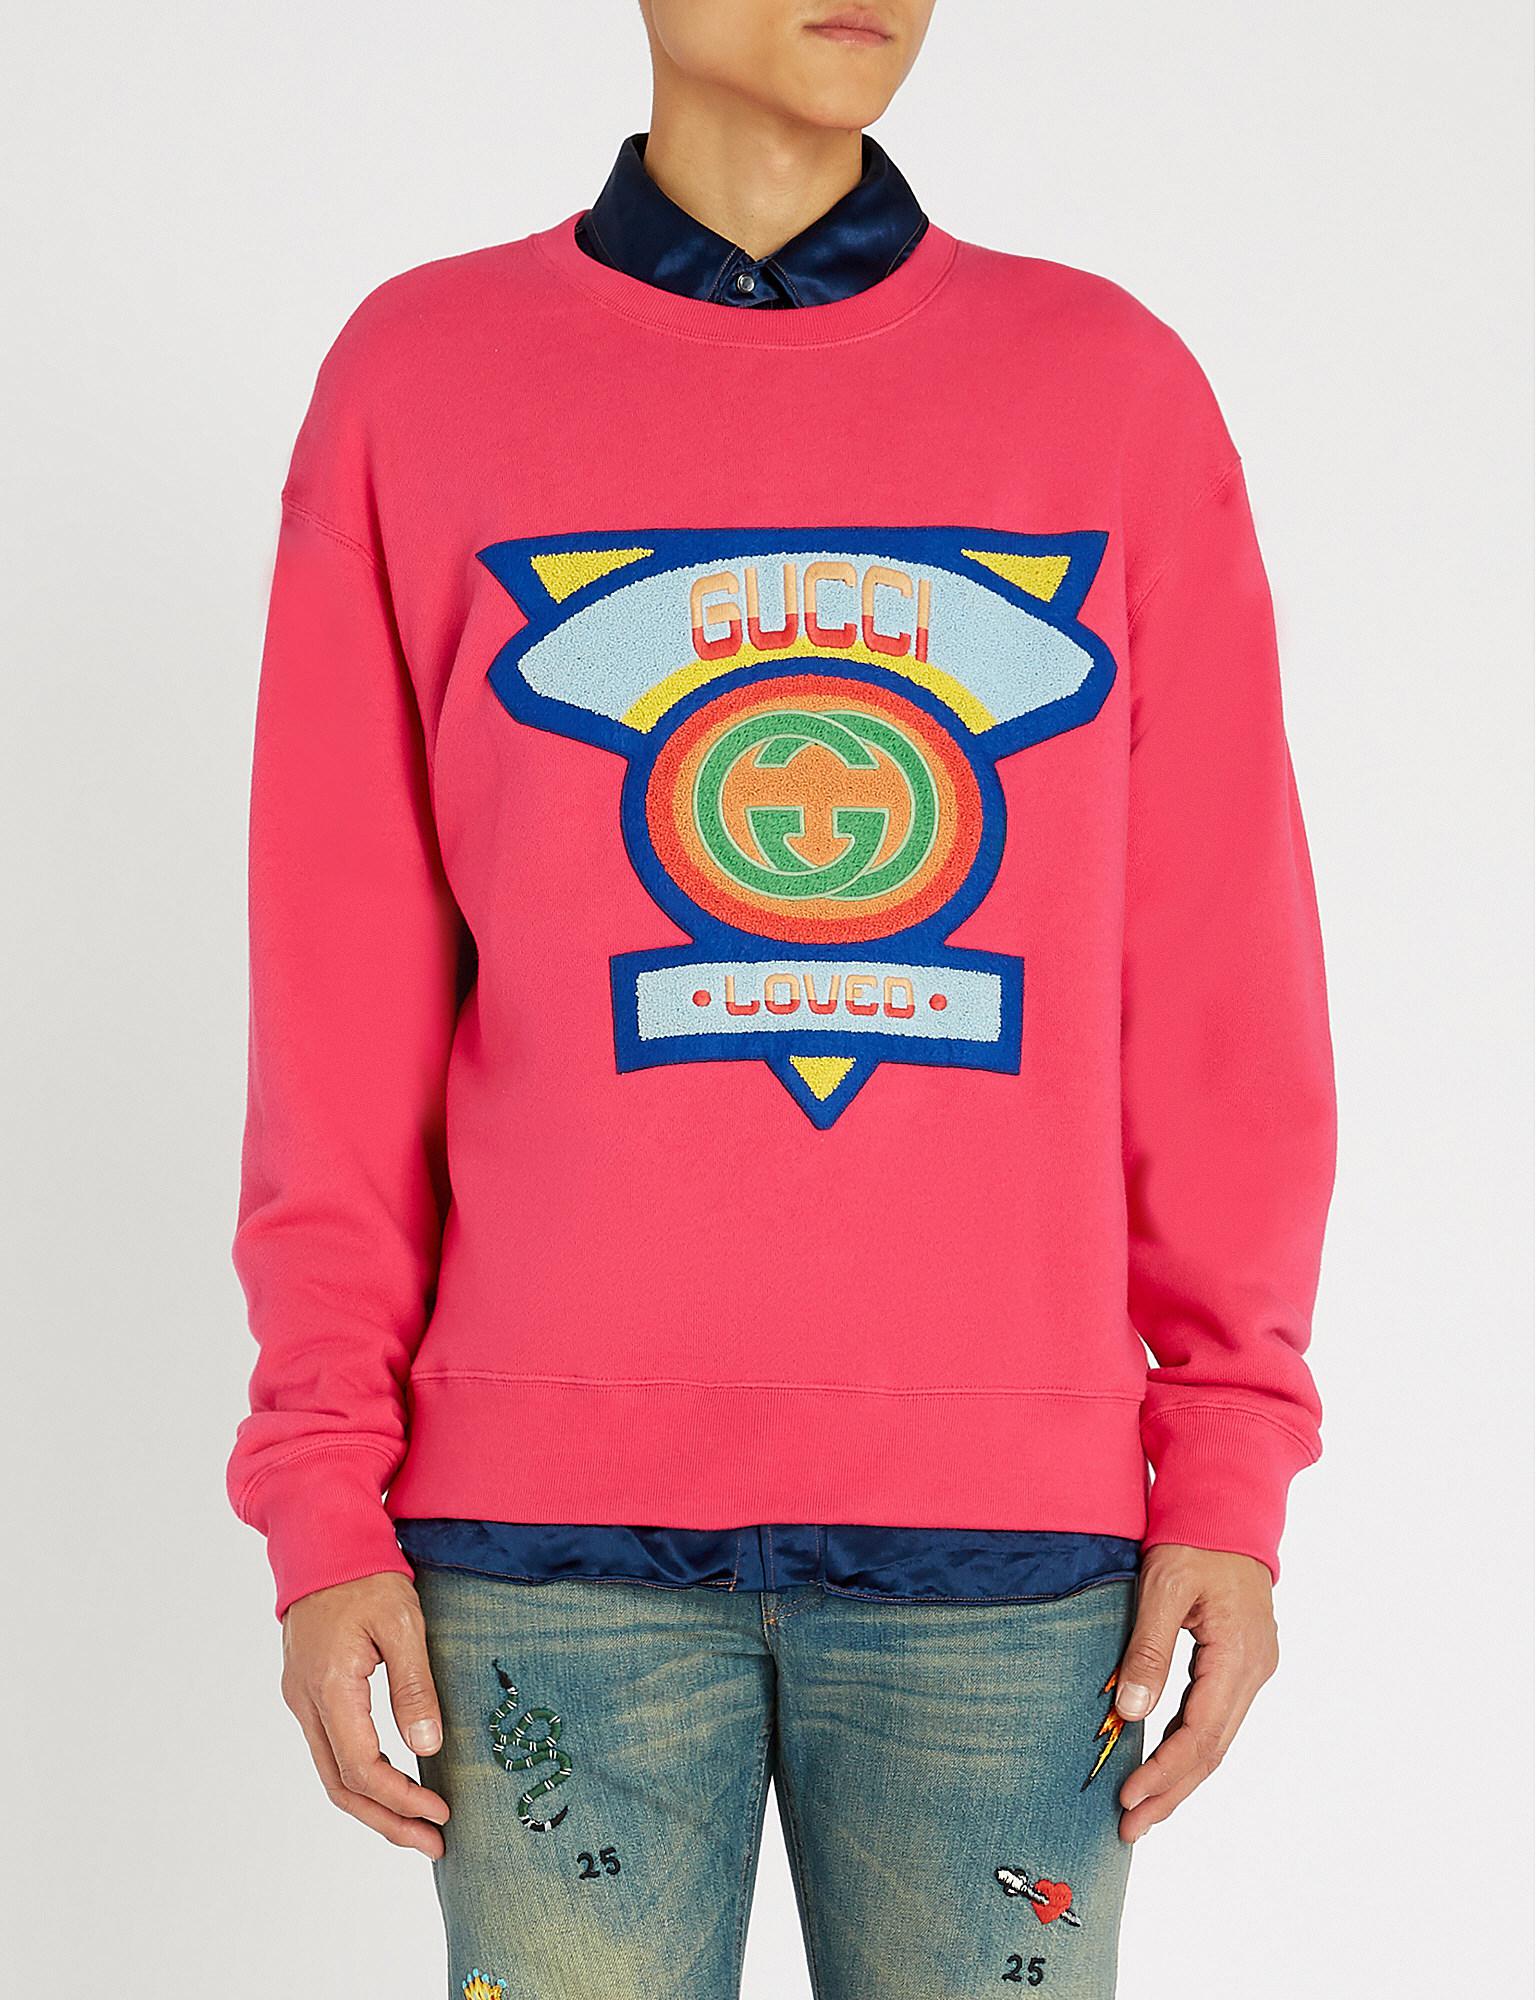 Gucci Loved Sweatshirt Discount, SAVE 45% - raptorunderlayment.com